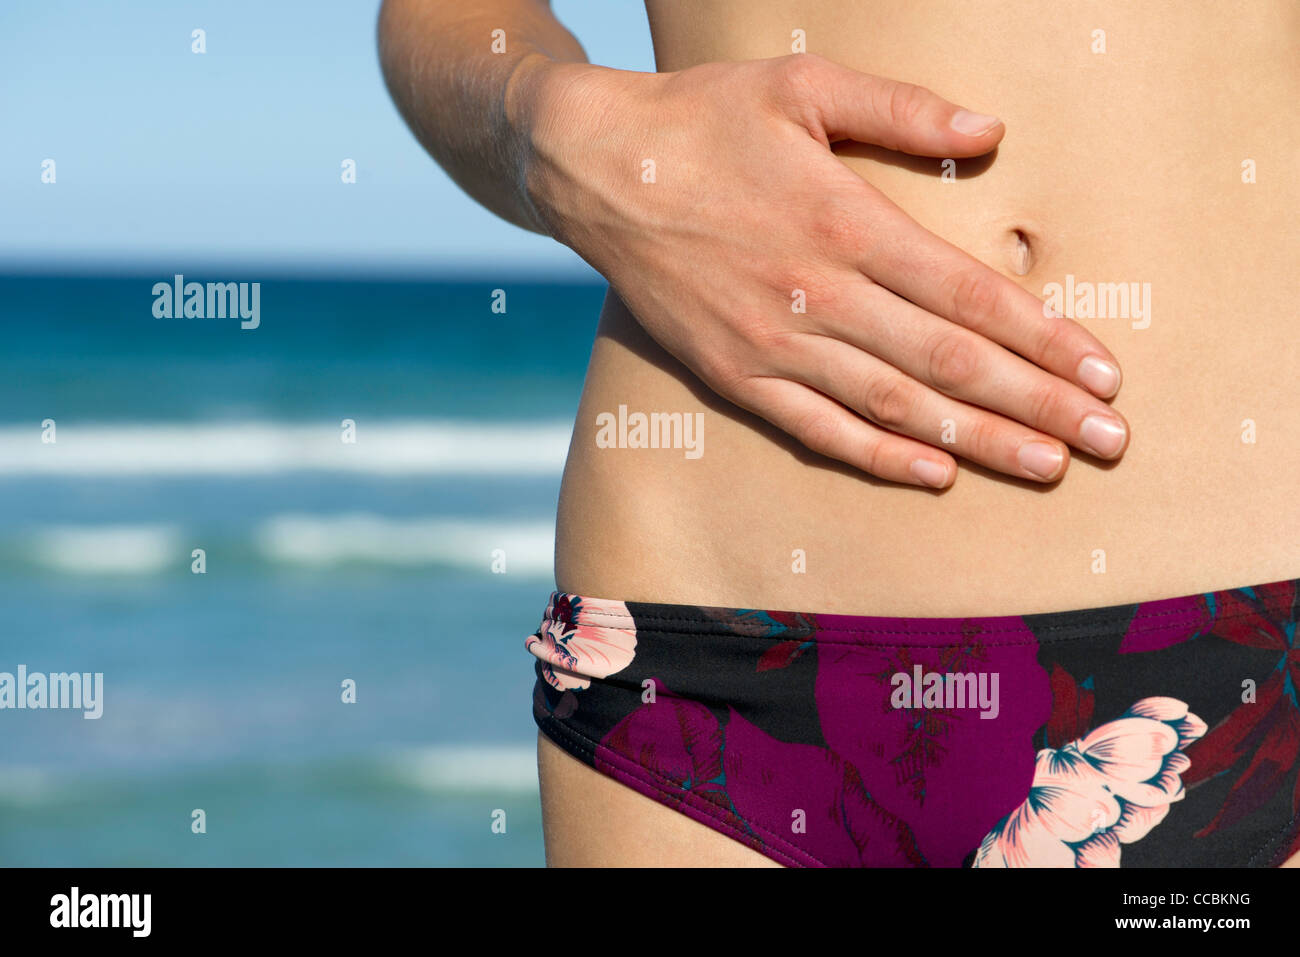 Closeup picture of female belly, bikini Stock Photo by